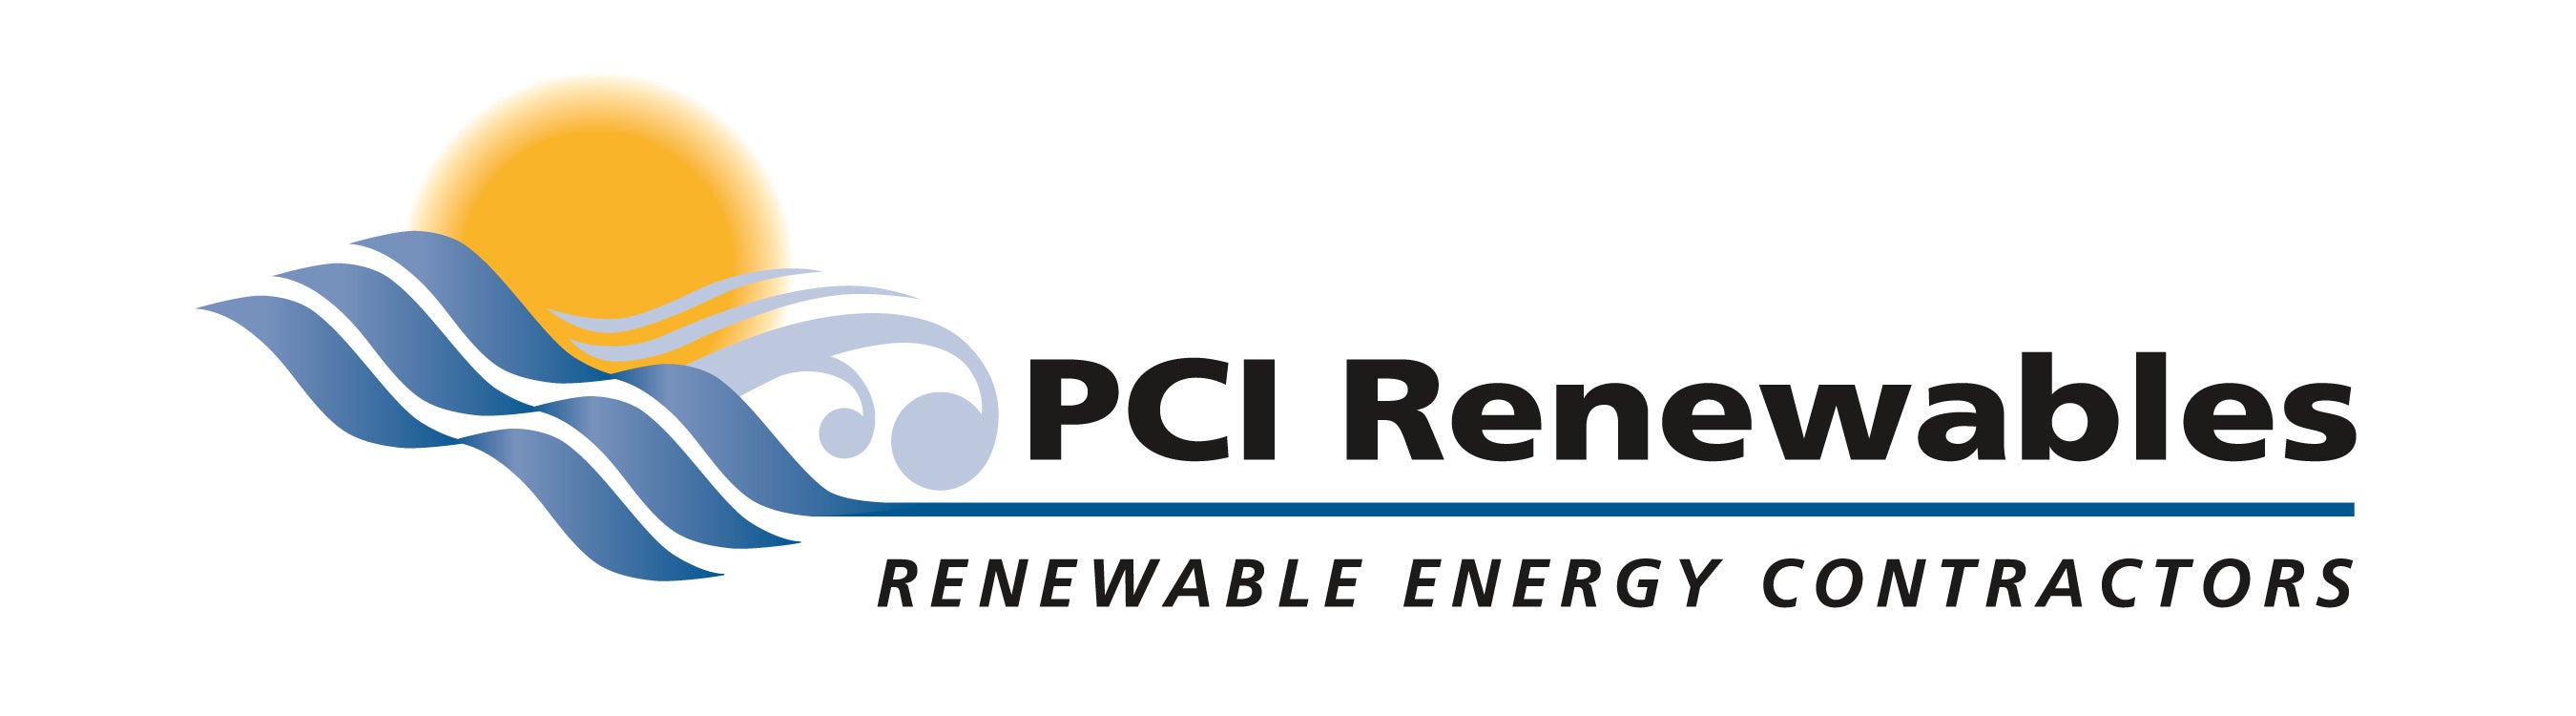 PCI Renewables logo